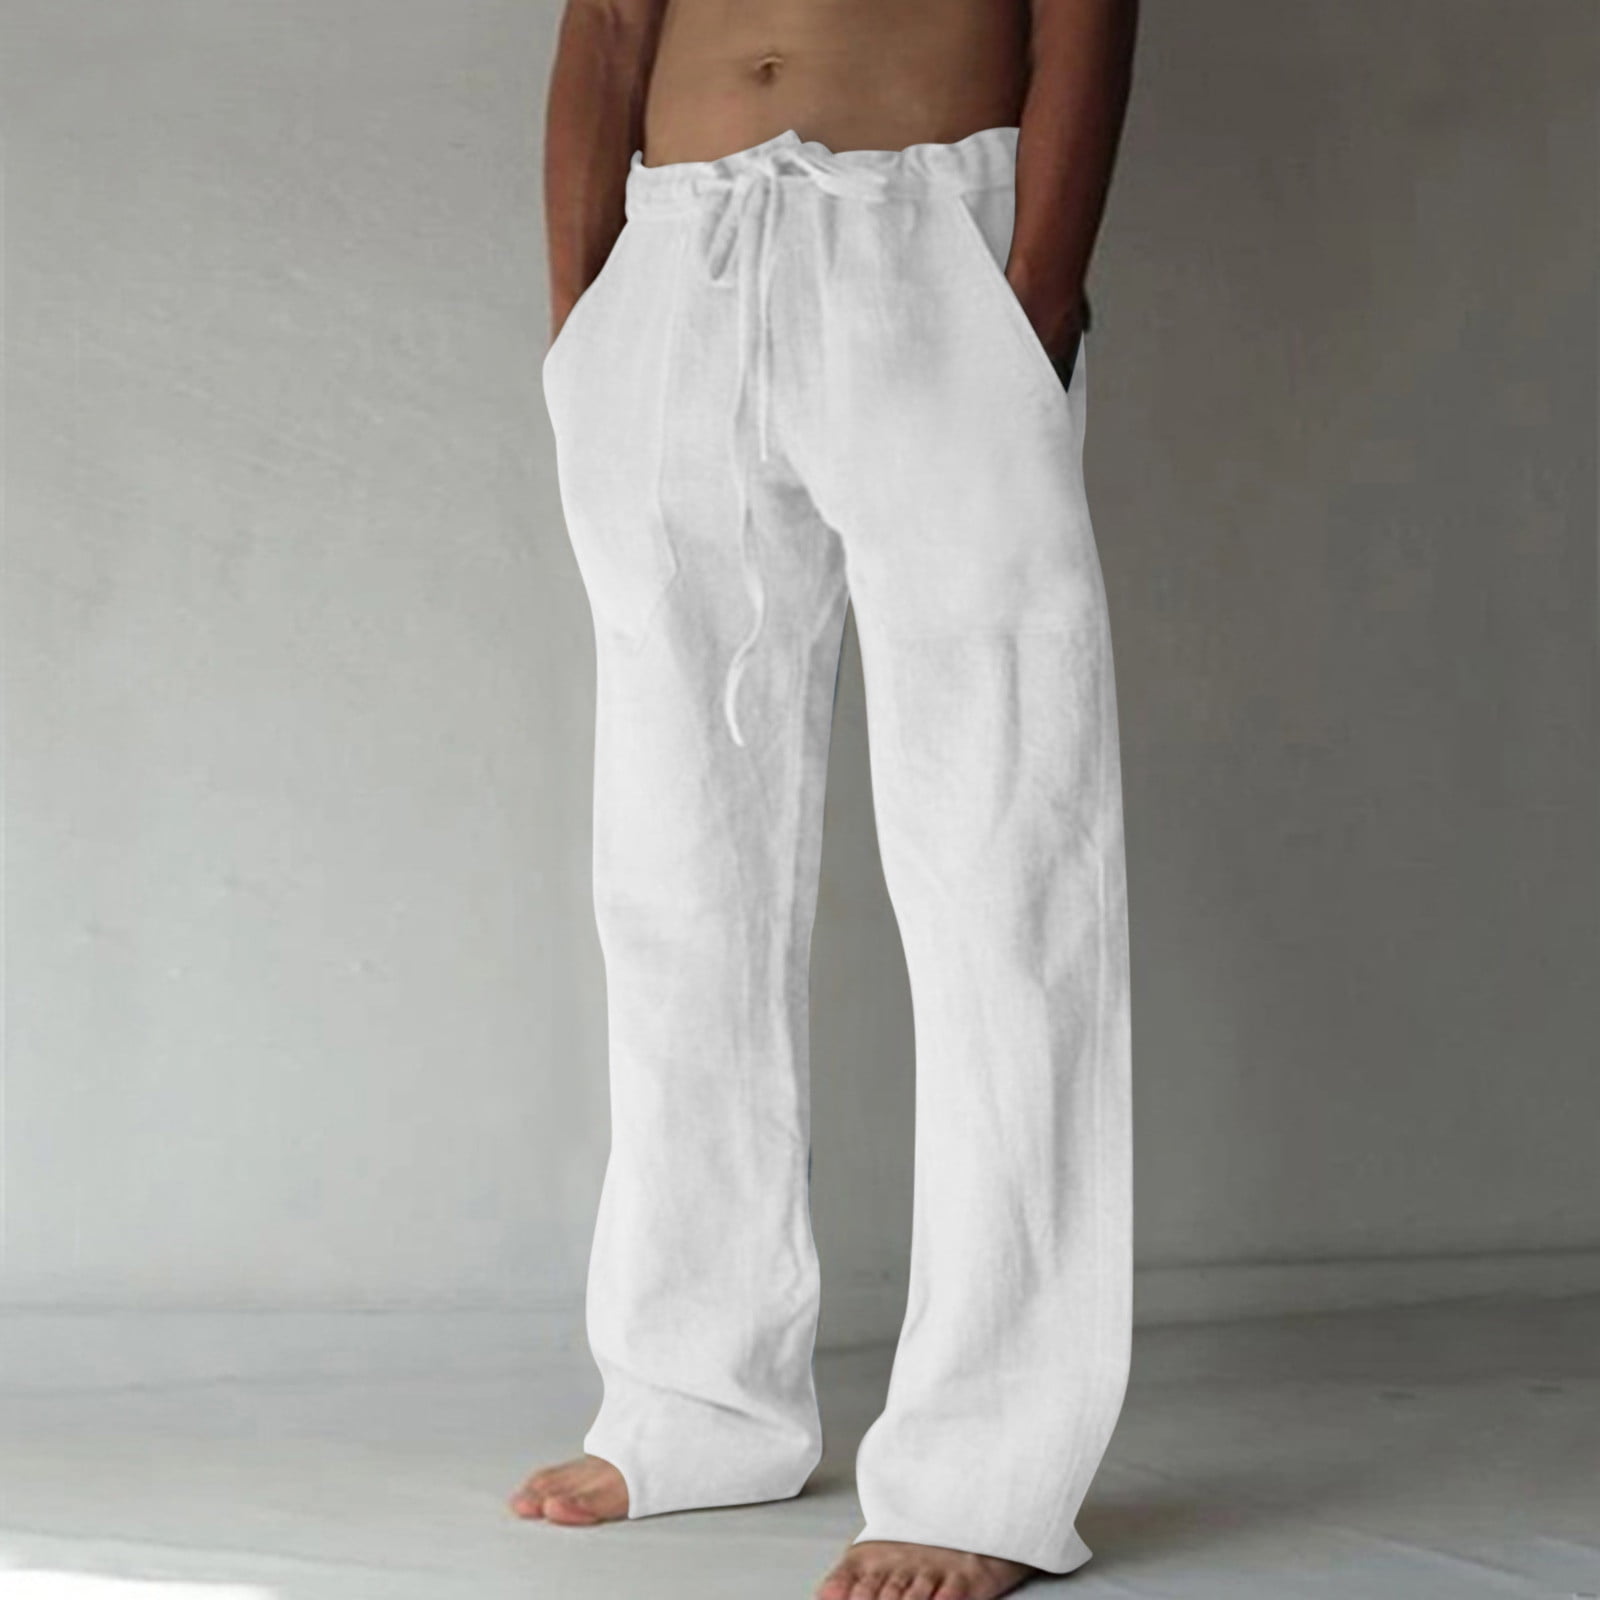 Mens Pants Clearance Under $15 JIOAKFA Men'S Cotton And Linen Elastic ...